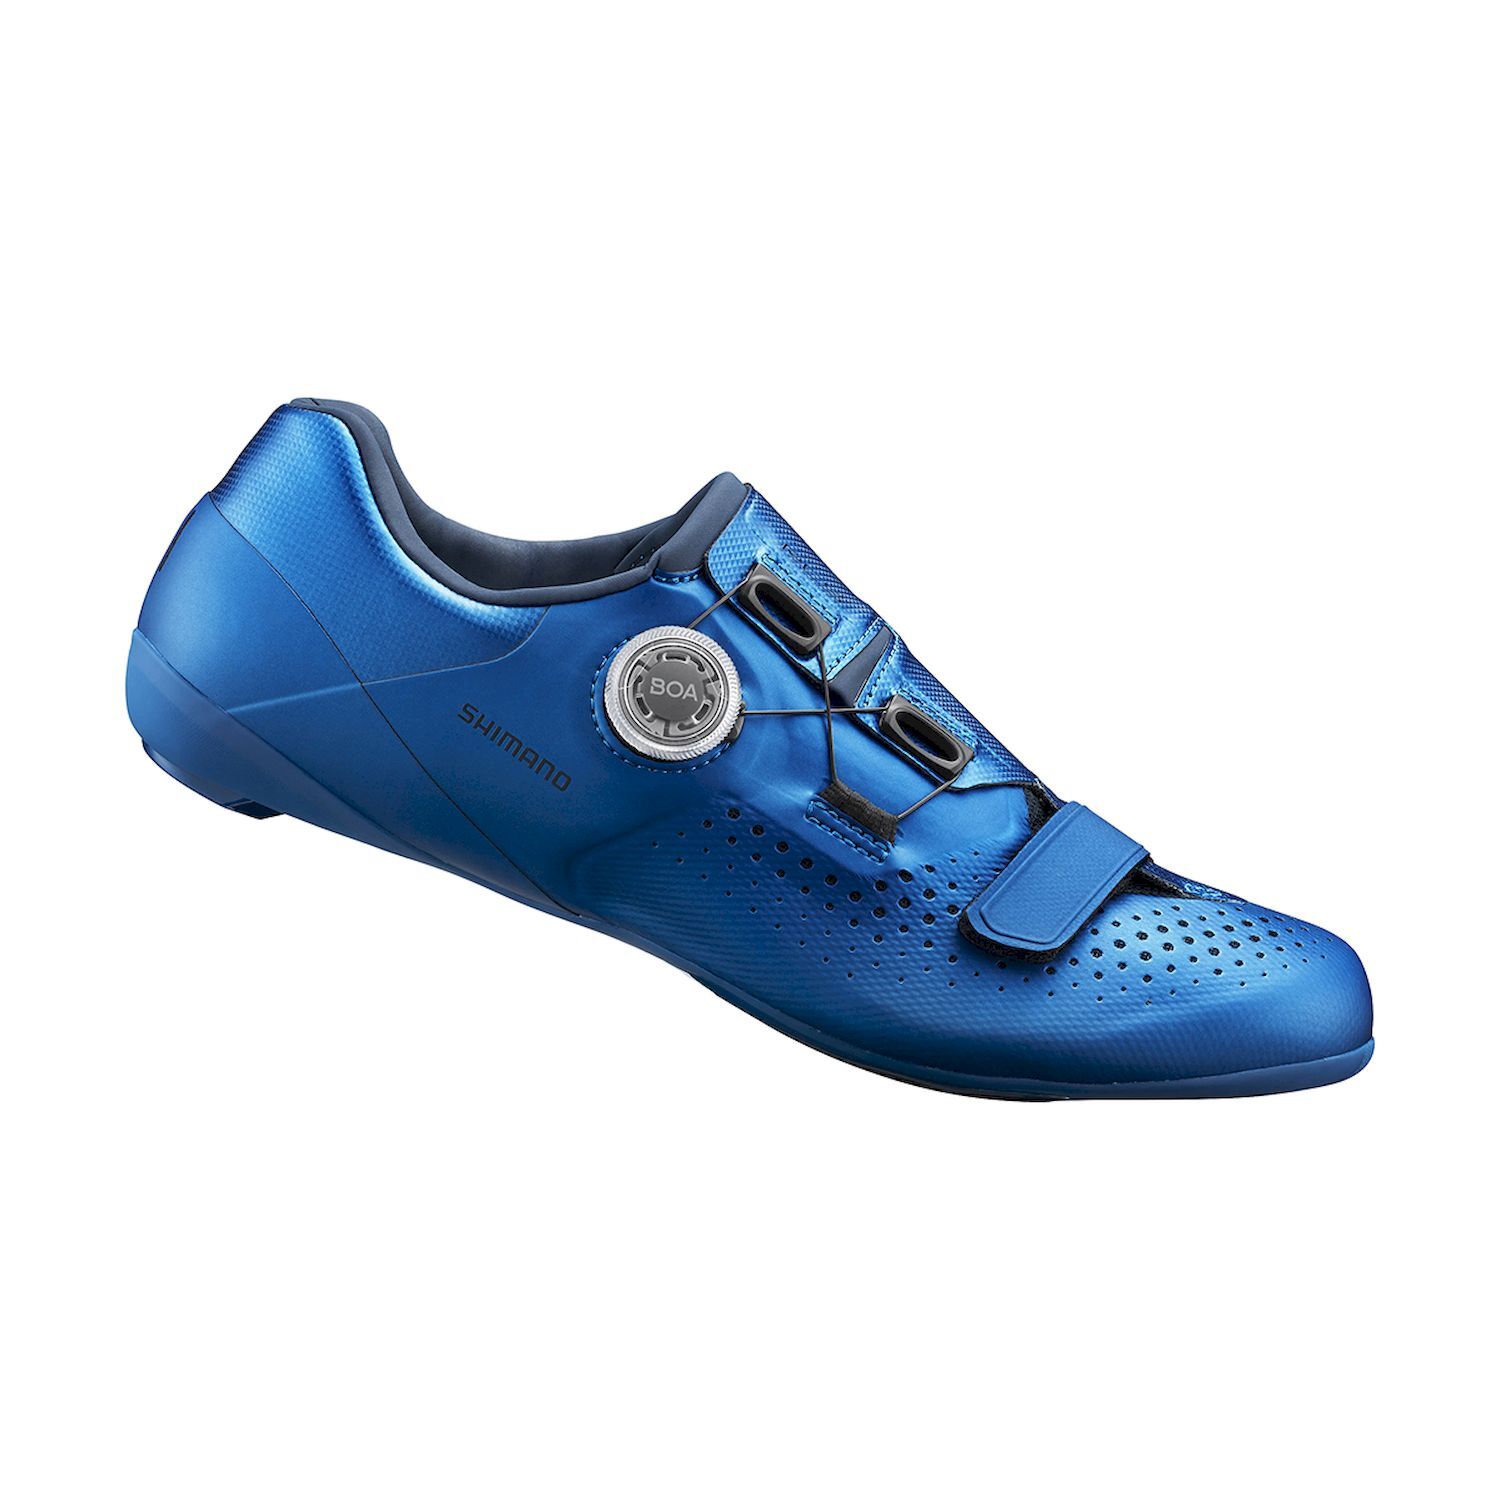 Shimano Route RC500 - Cycling shoes - Men's